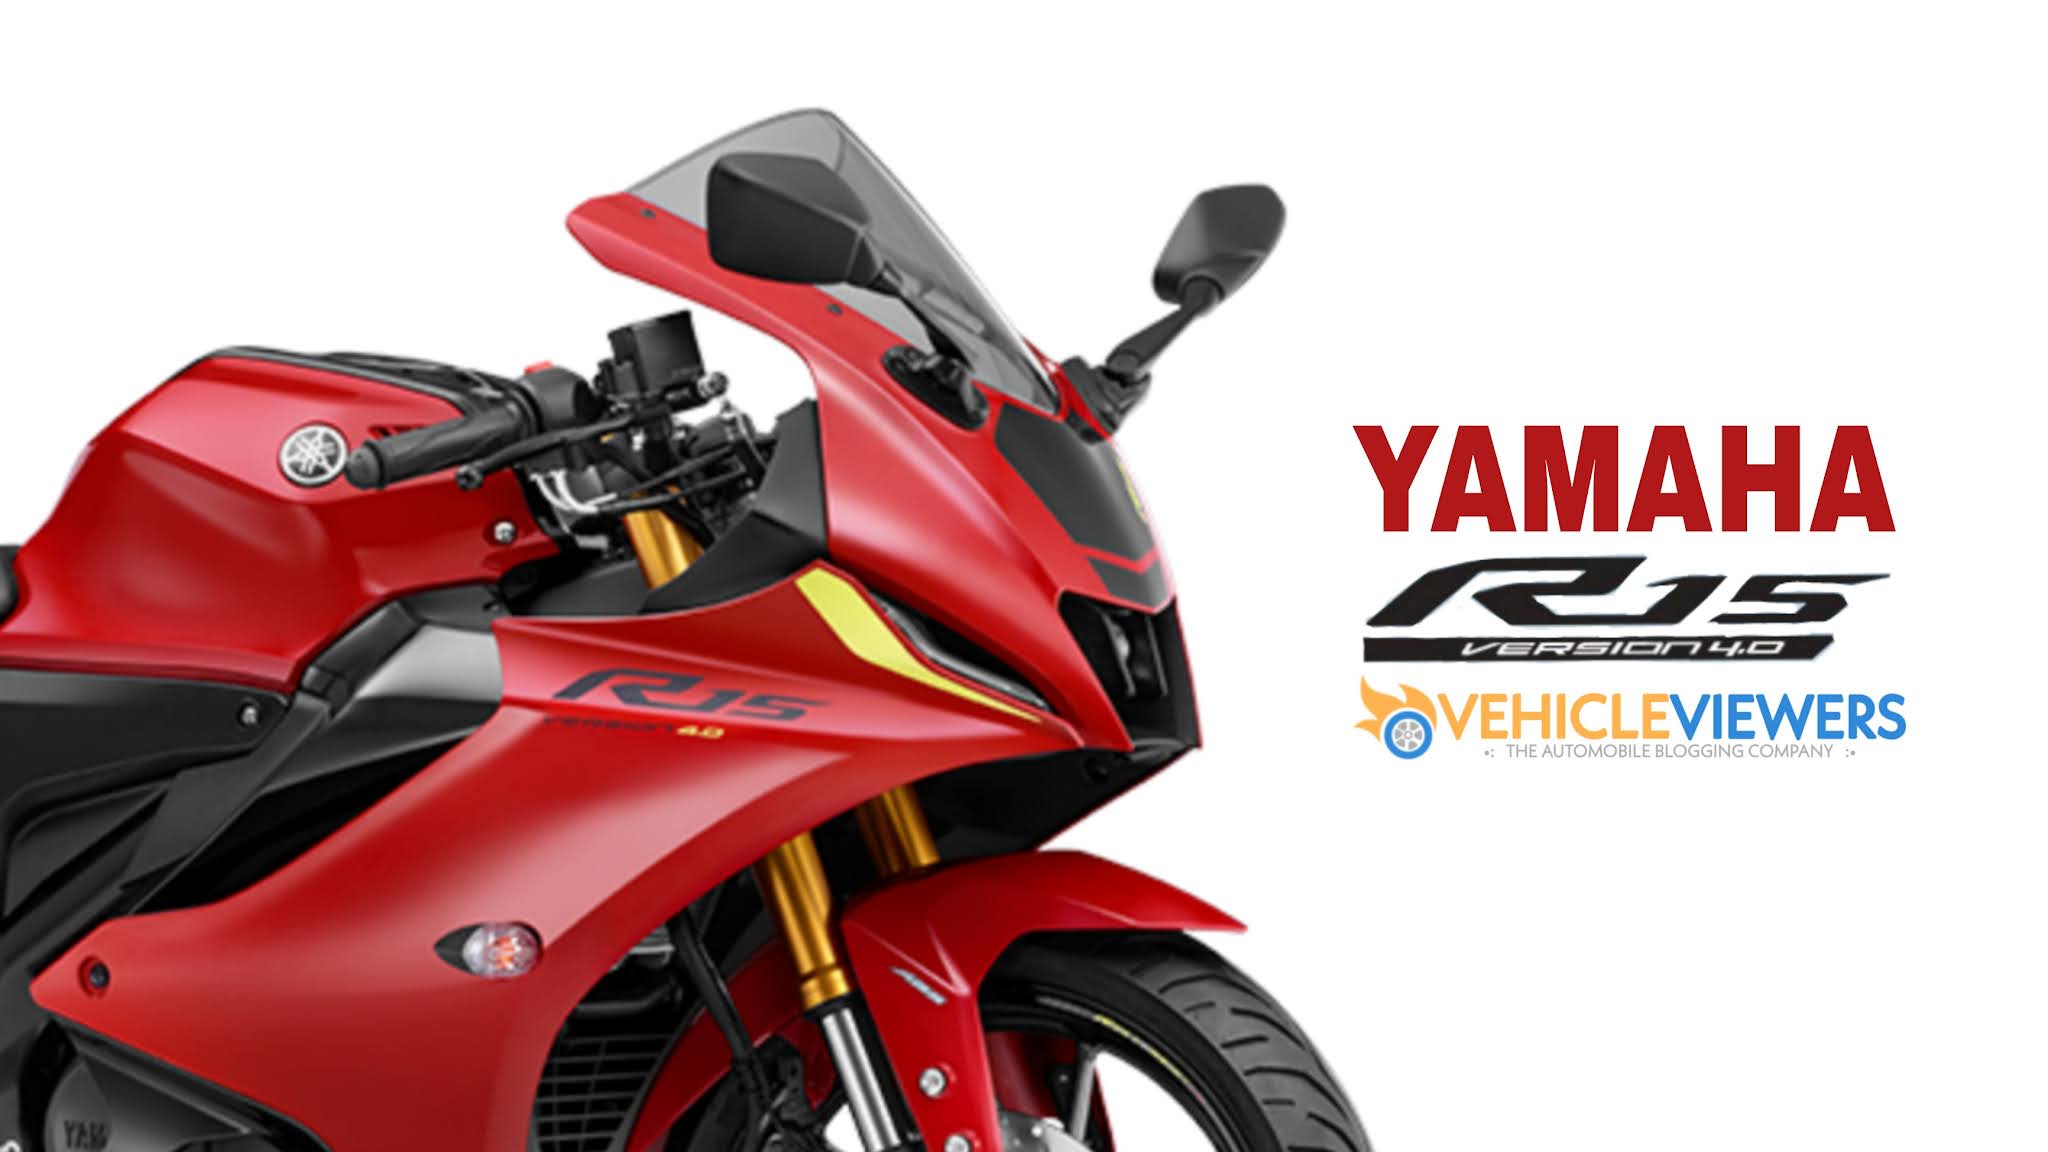 yamaha r15 red new model